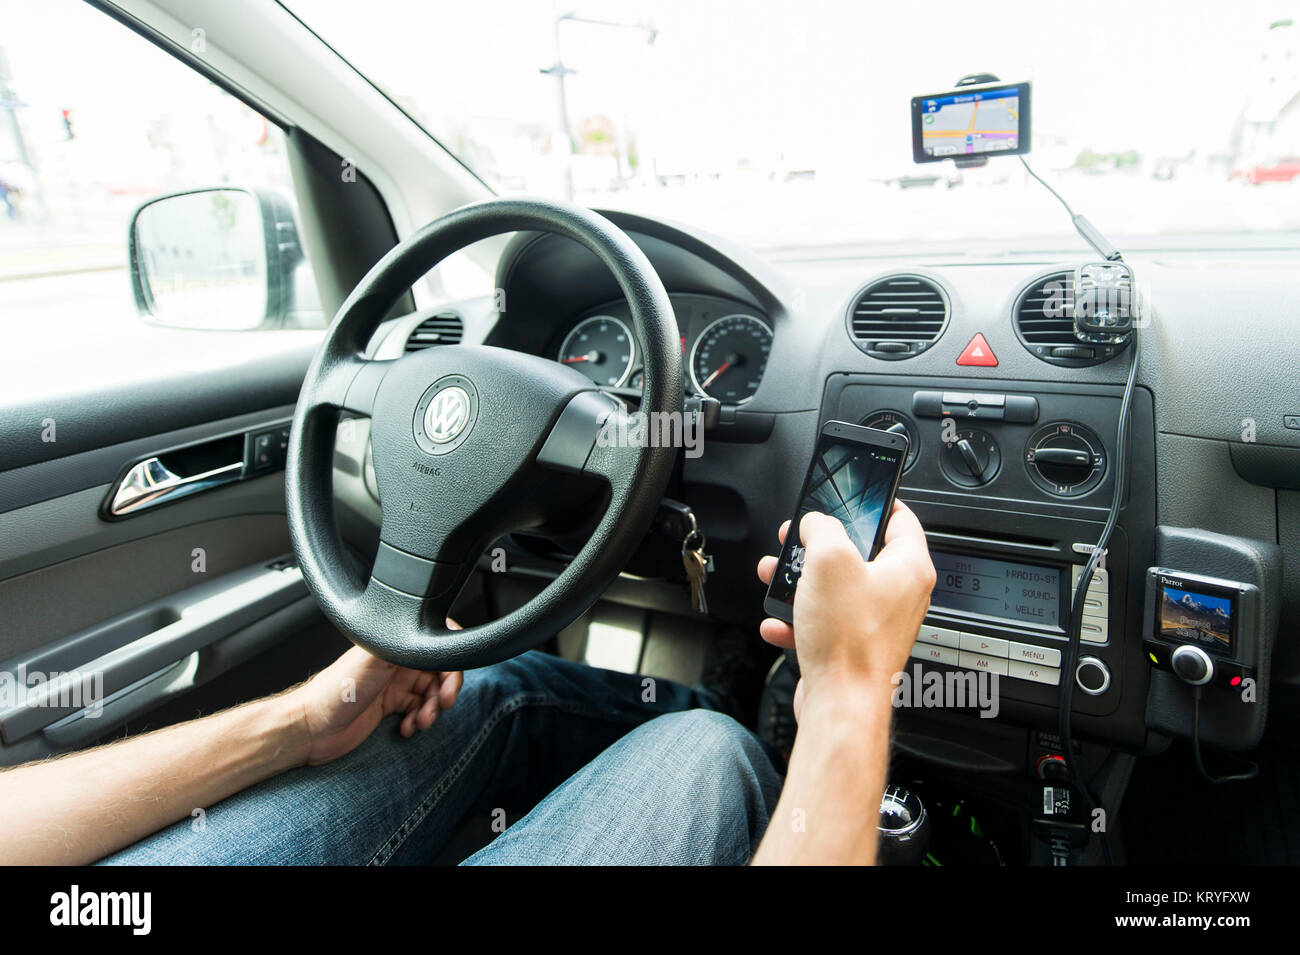 Autofahrer bedient Handy während der Fahrt - using a mobile while driving a car Stock Photo